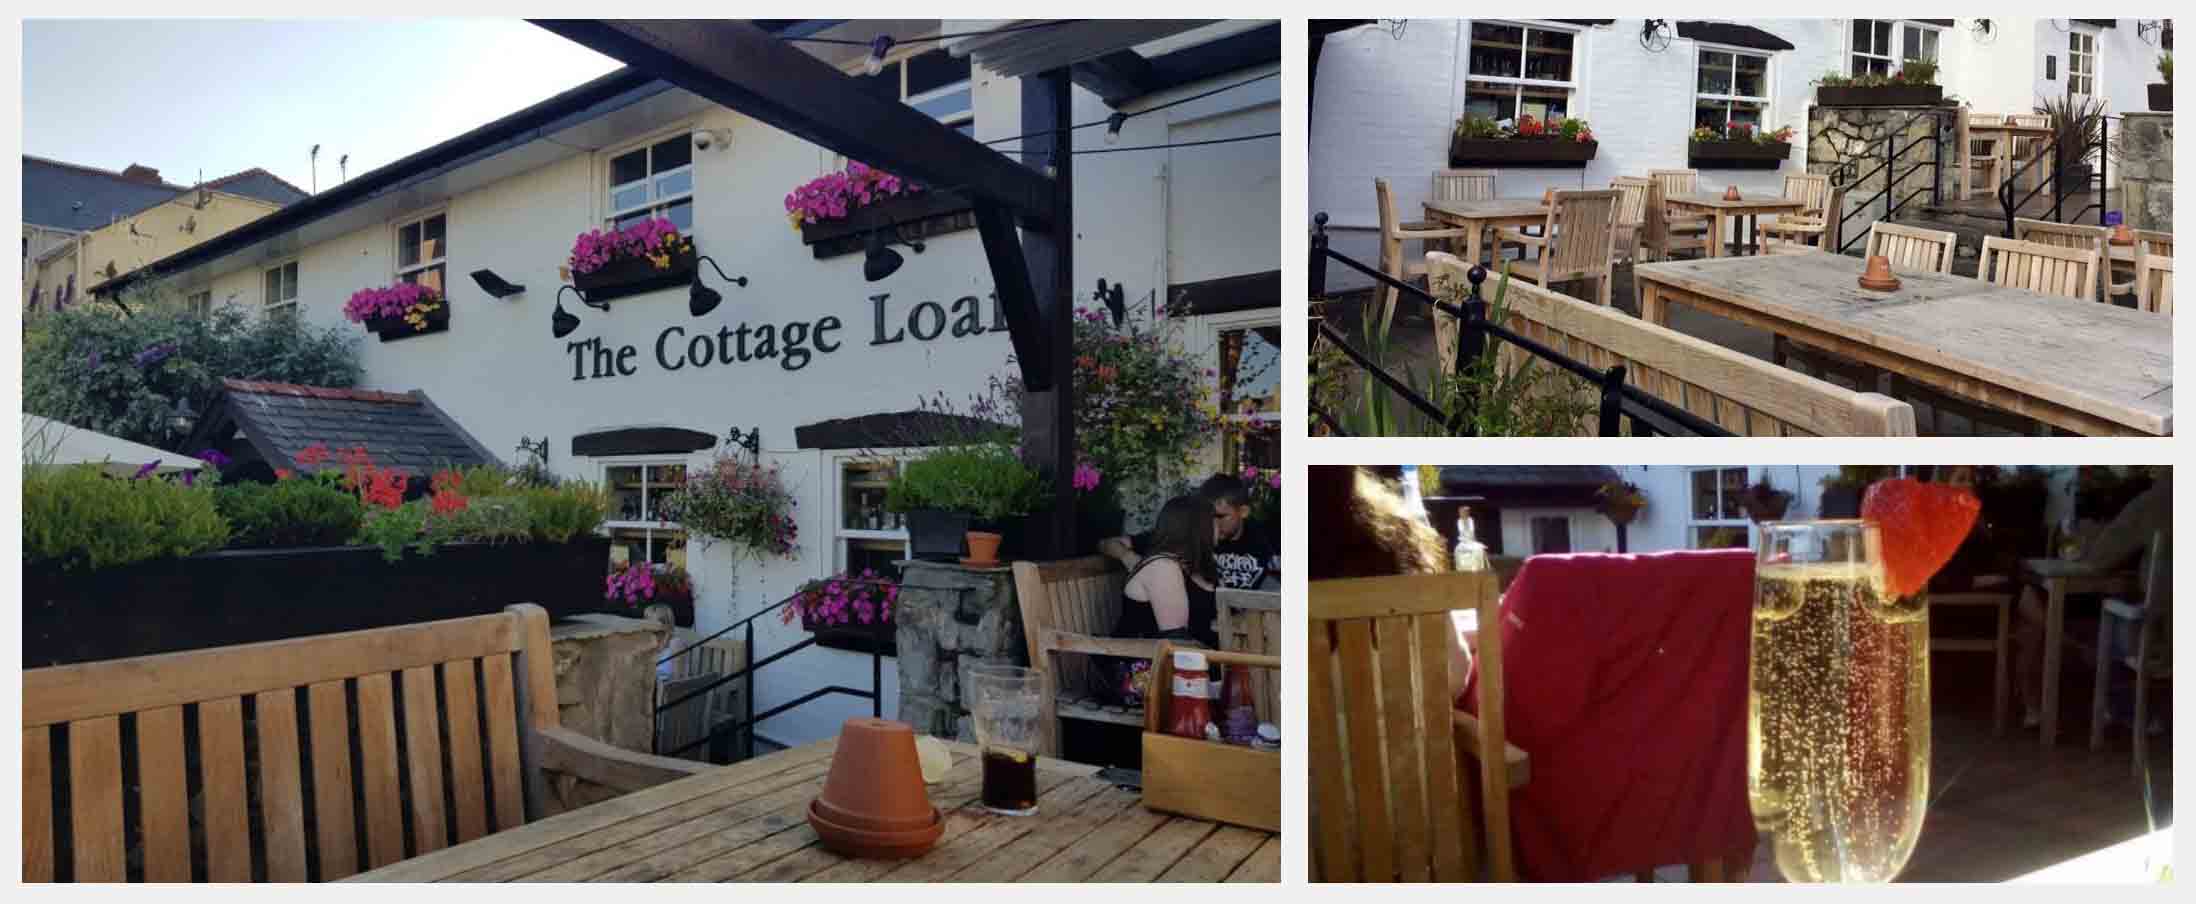 Best Beer Gardens in Wales - The Cottage Loaf